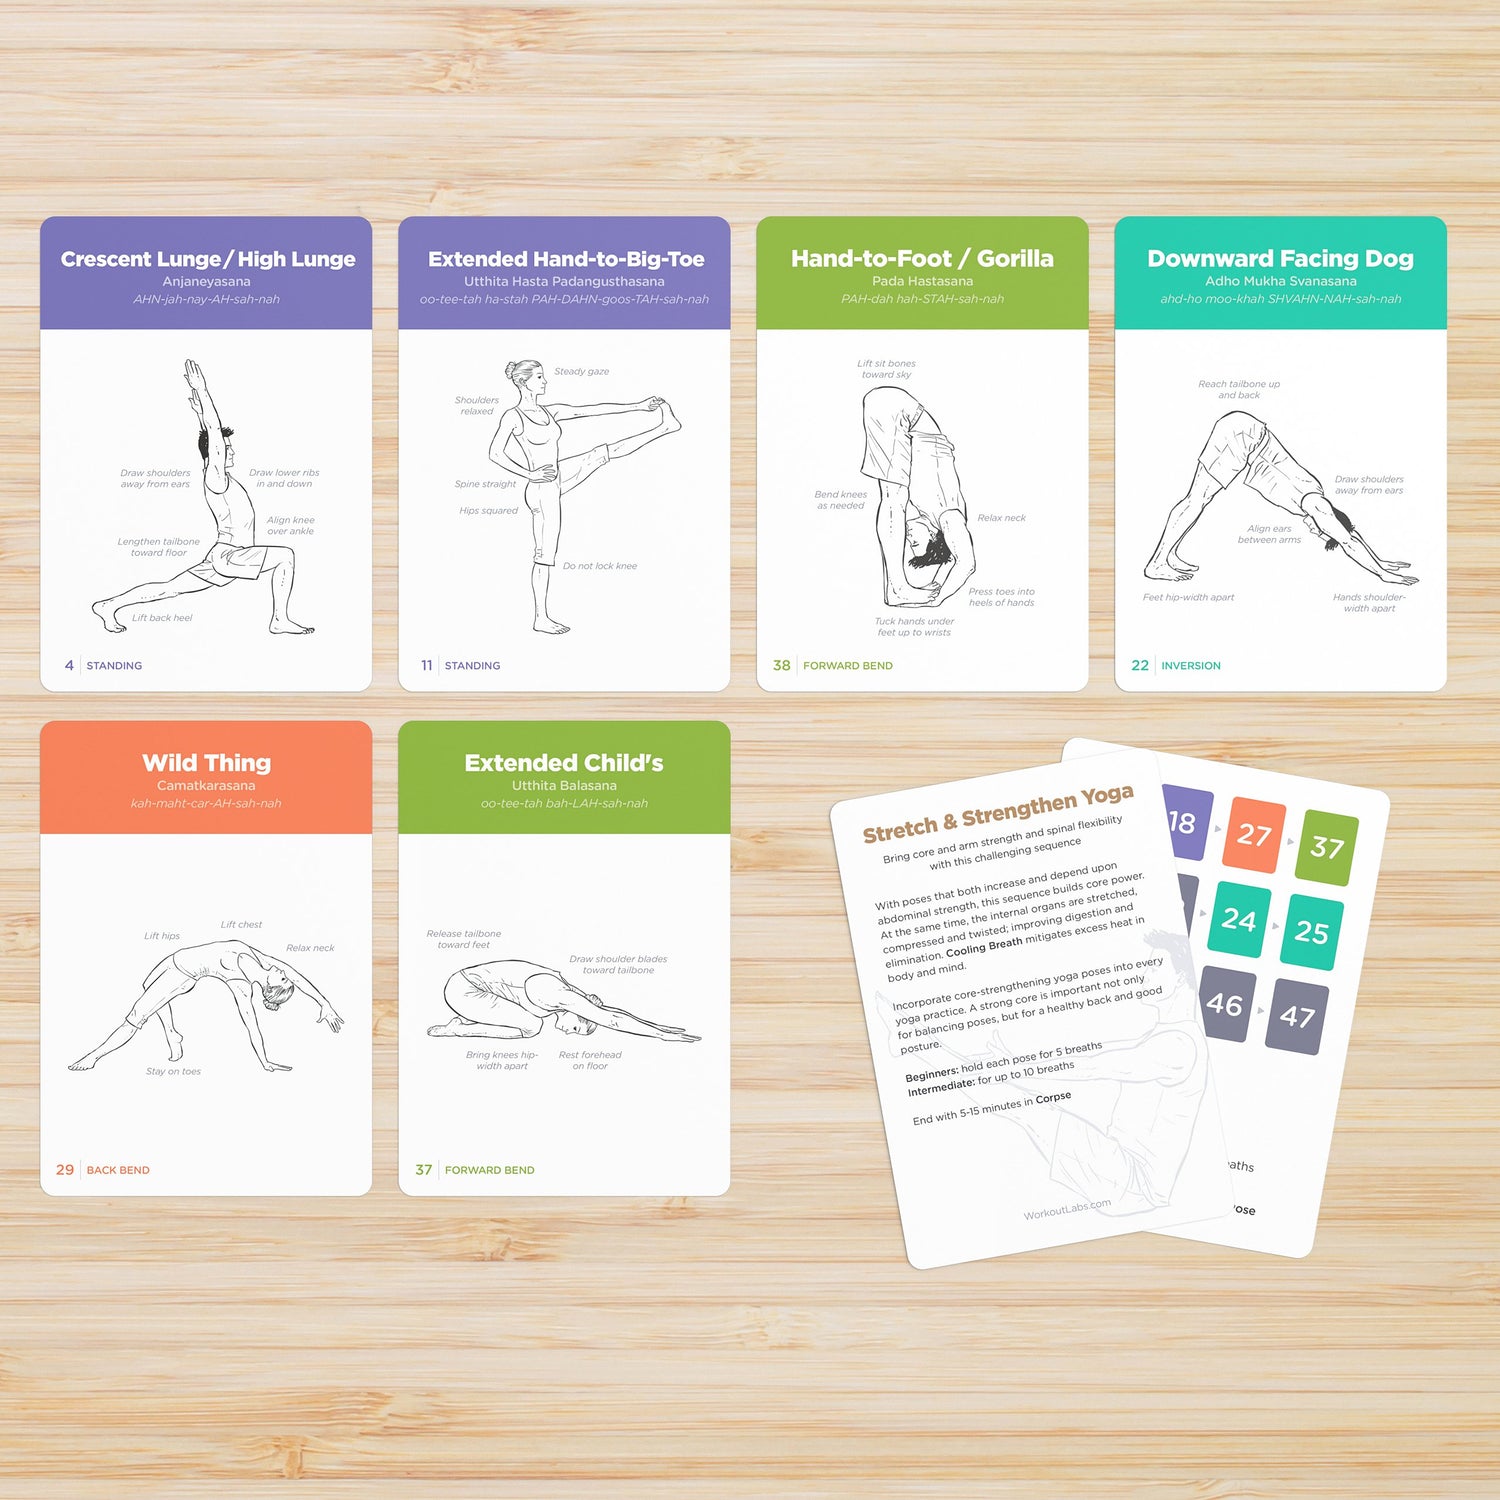 Yoga Cards I & II – Complete Set Beginners & Intermediate: Professional  Study, Class Sequencing & Practice Guide · Premium Yoga Asana Flash Cards  Deck